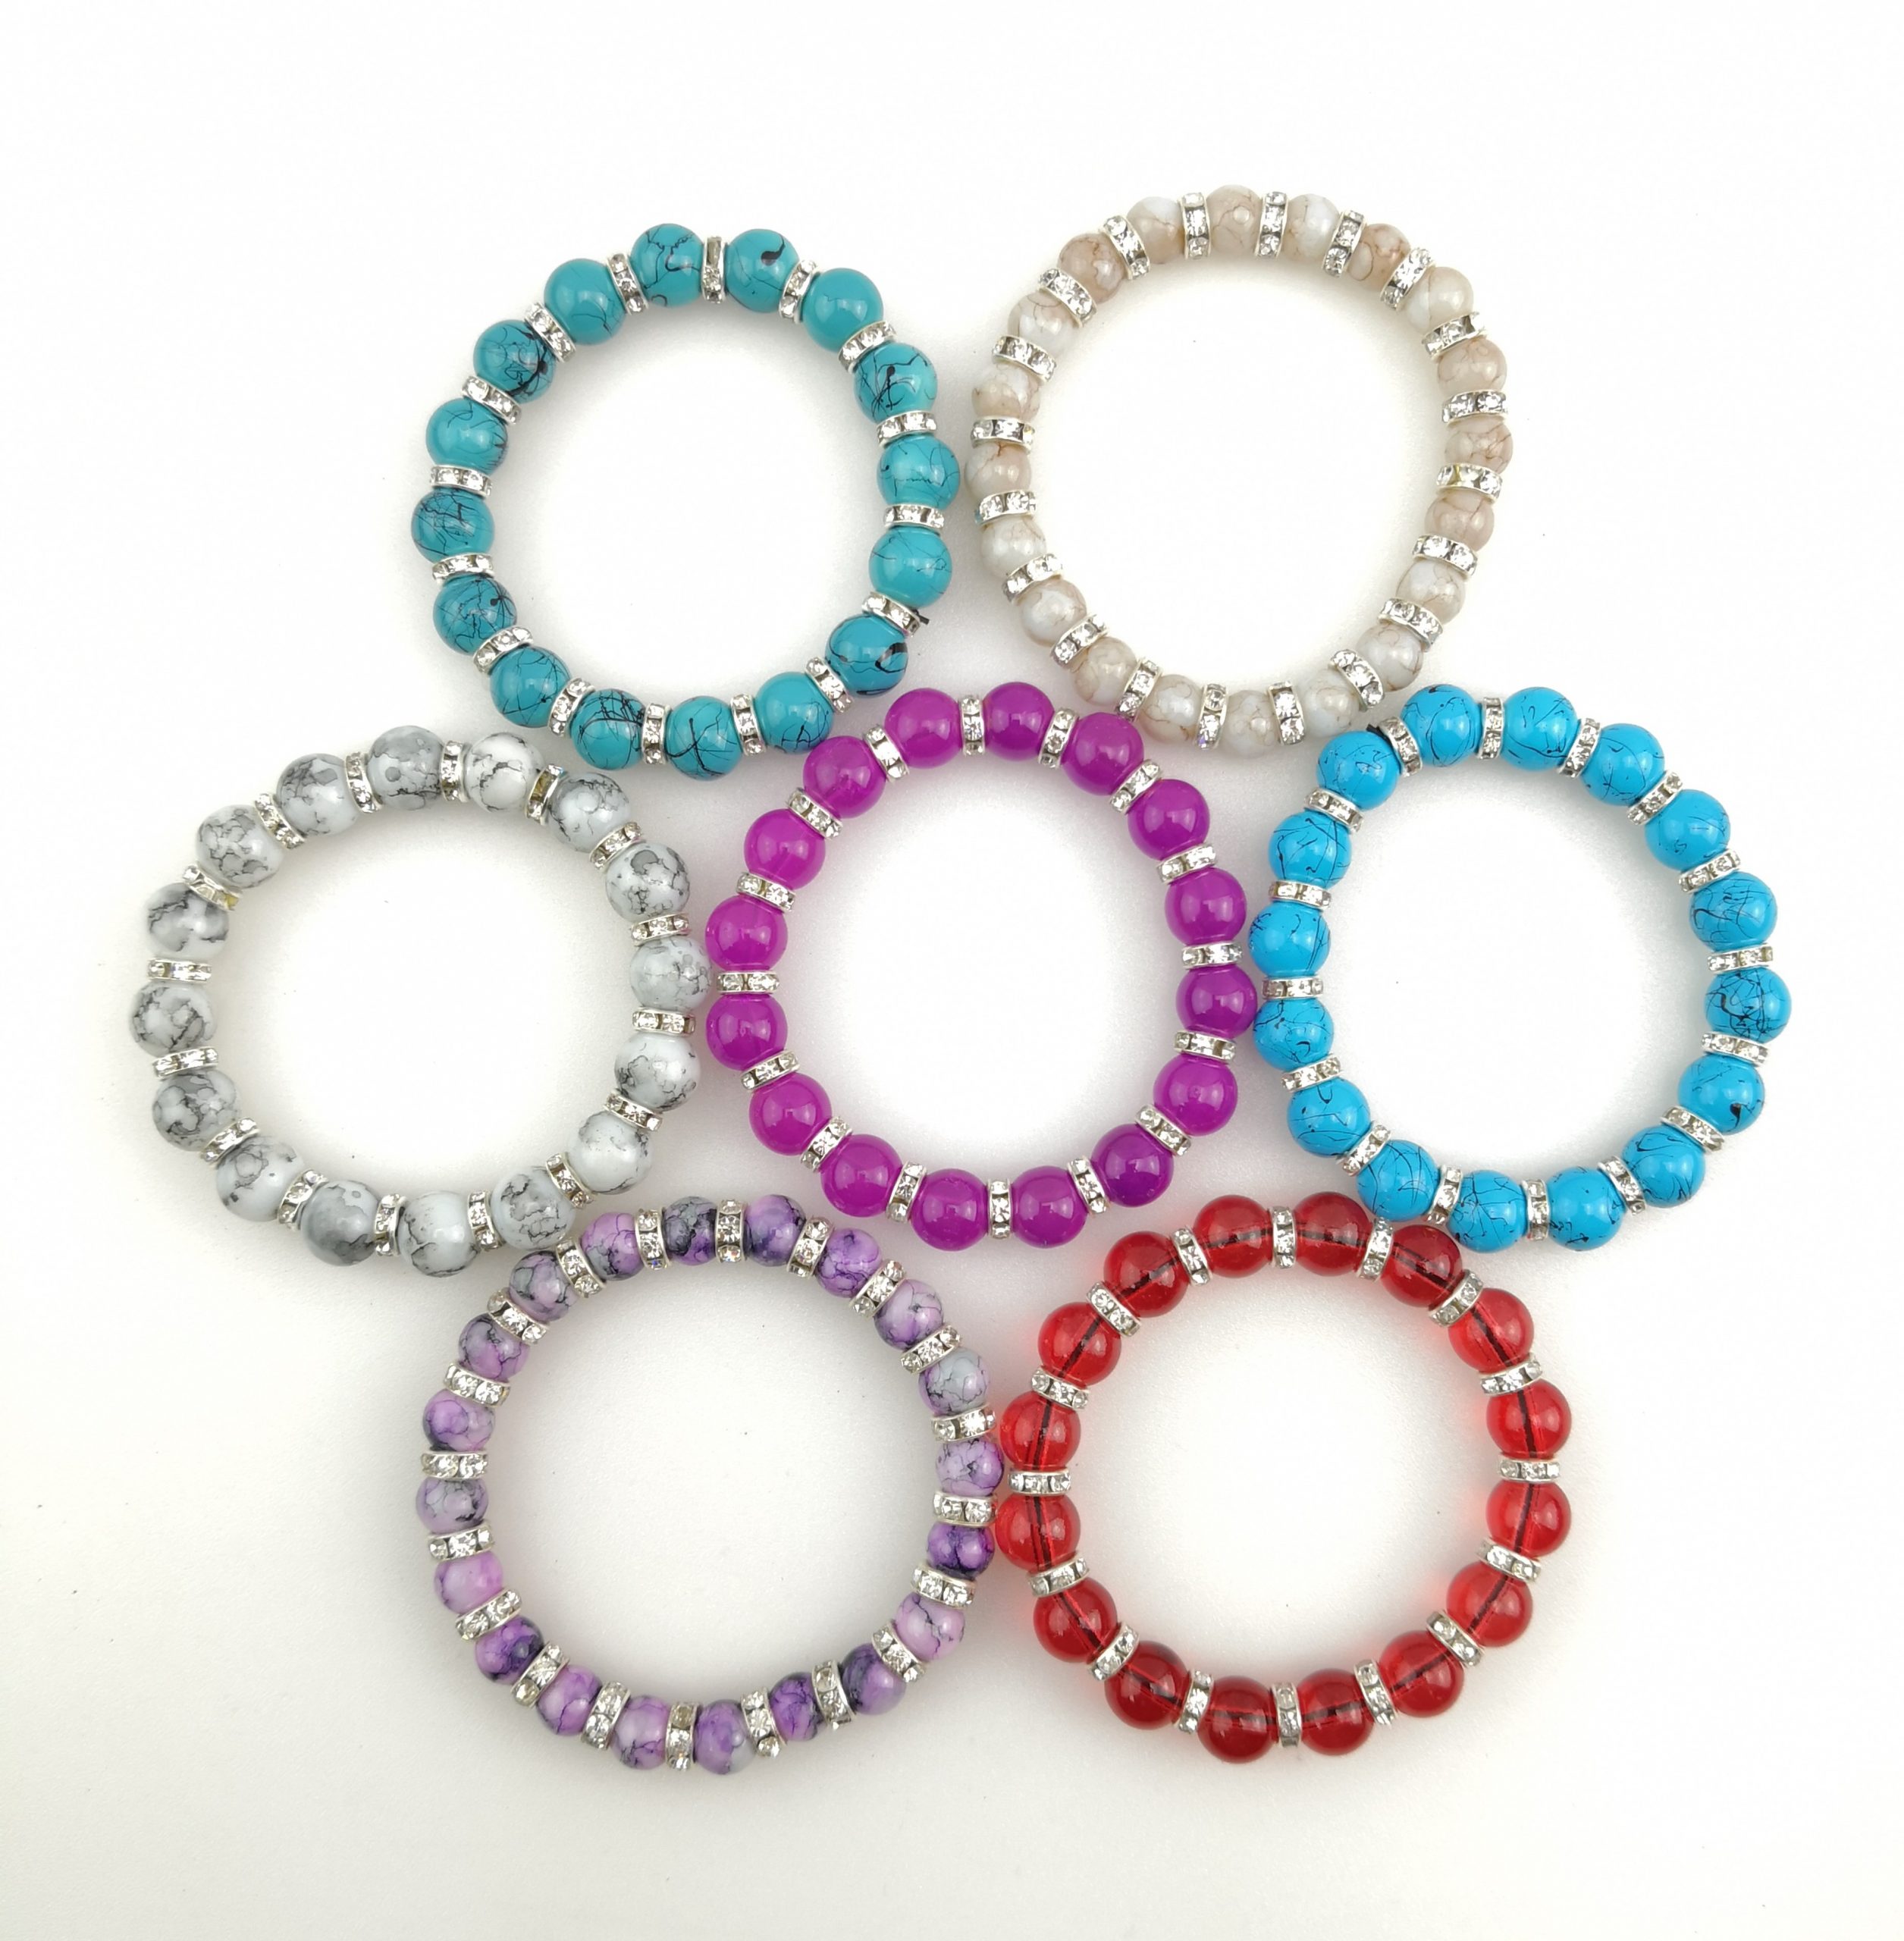 Turkish Style Handmade Oval Glass Colorful Lampwork Beads Bracelet